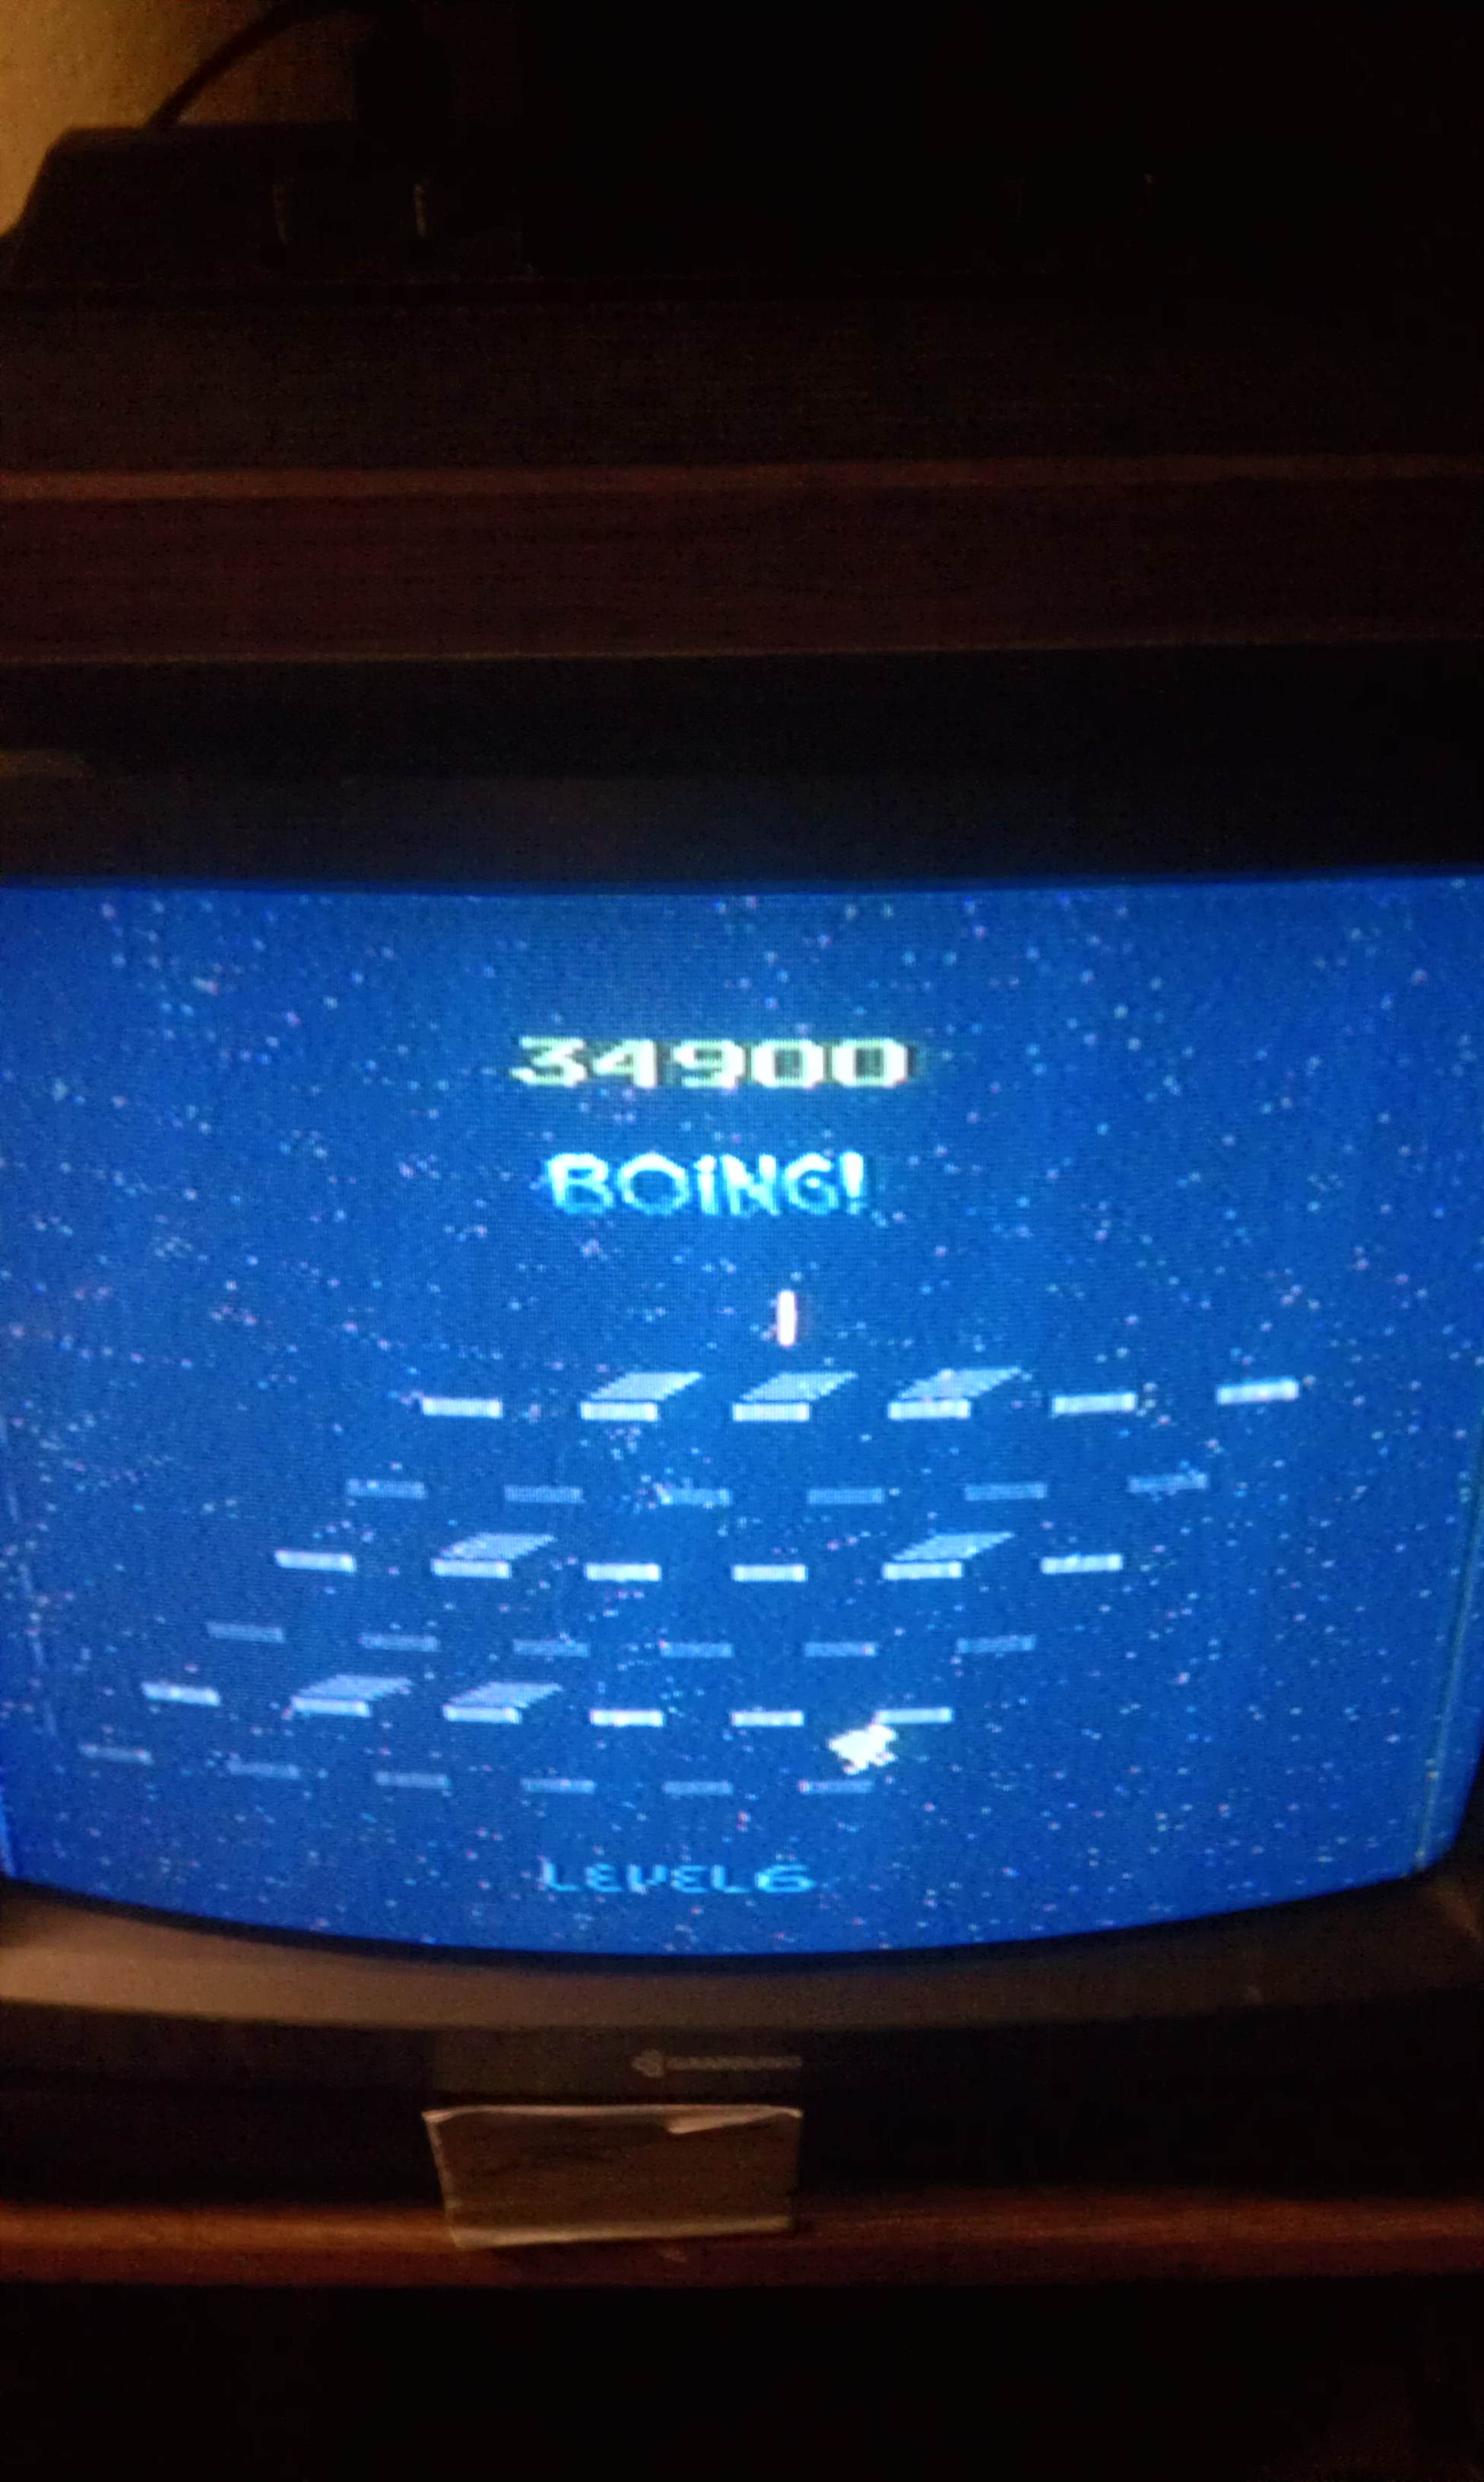 S.BAZ: Boing! (Atari 2600) 34,900 points on 2018-09-25 20:05:34